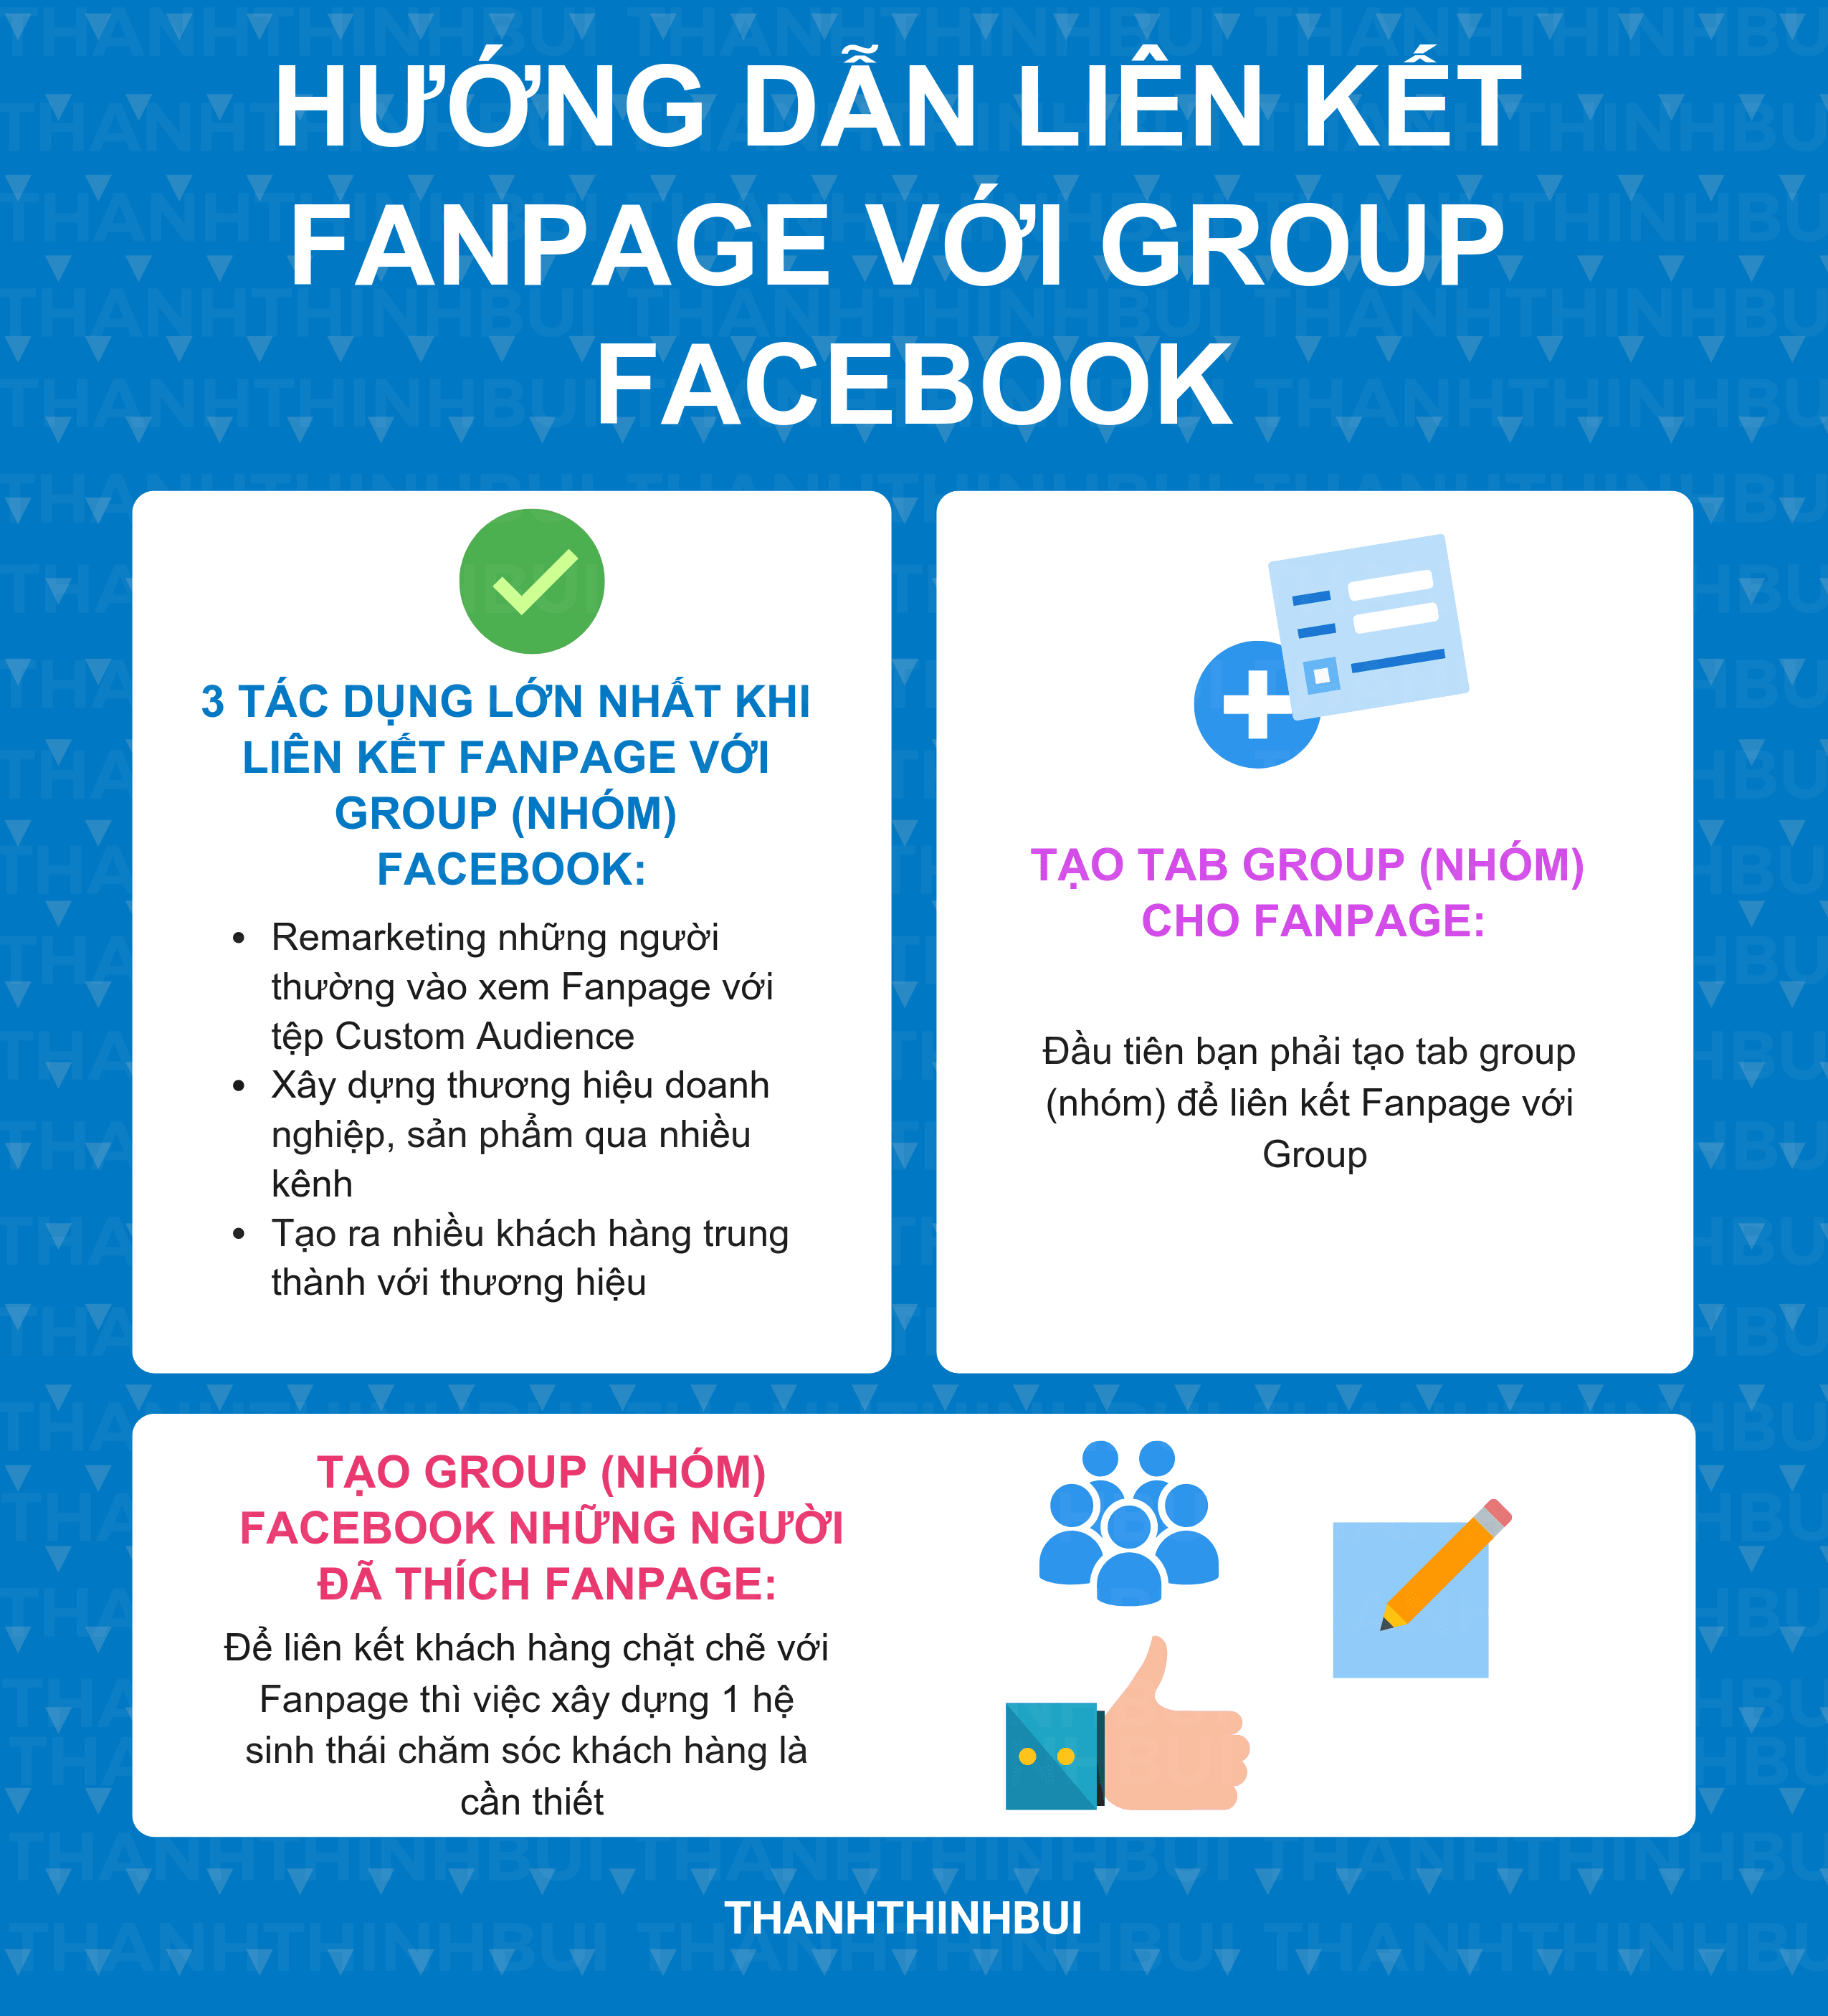 huong-dan-lien-ket-facebook-infographic